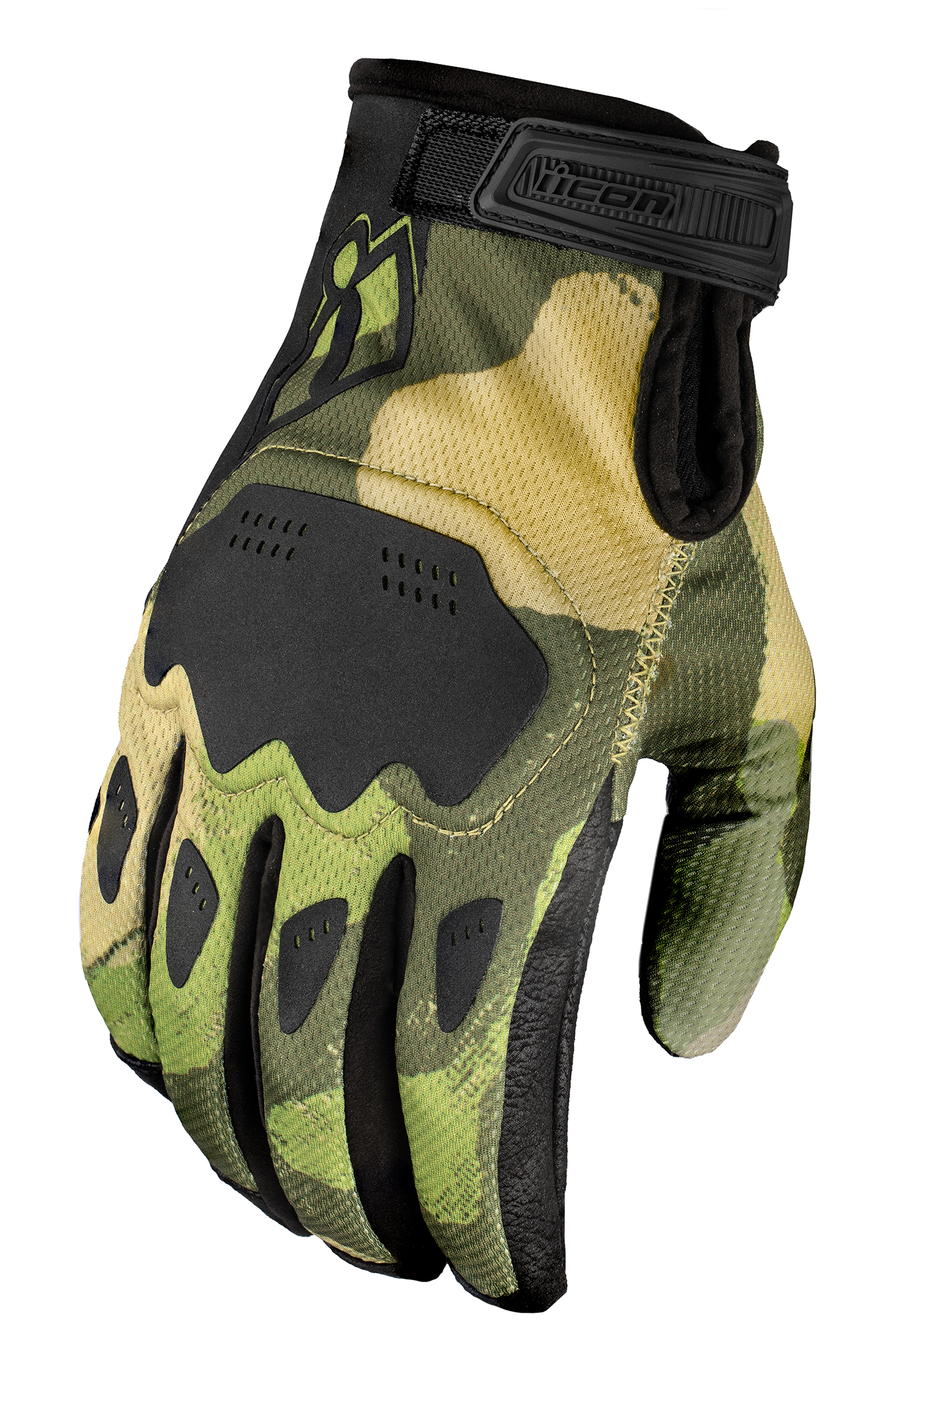 ICON Hooligan Magnacross™ Gloves - Camo Tan - Small 3301-4827